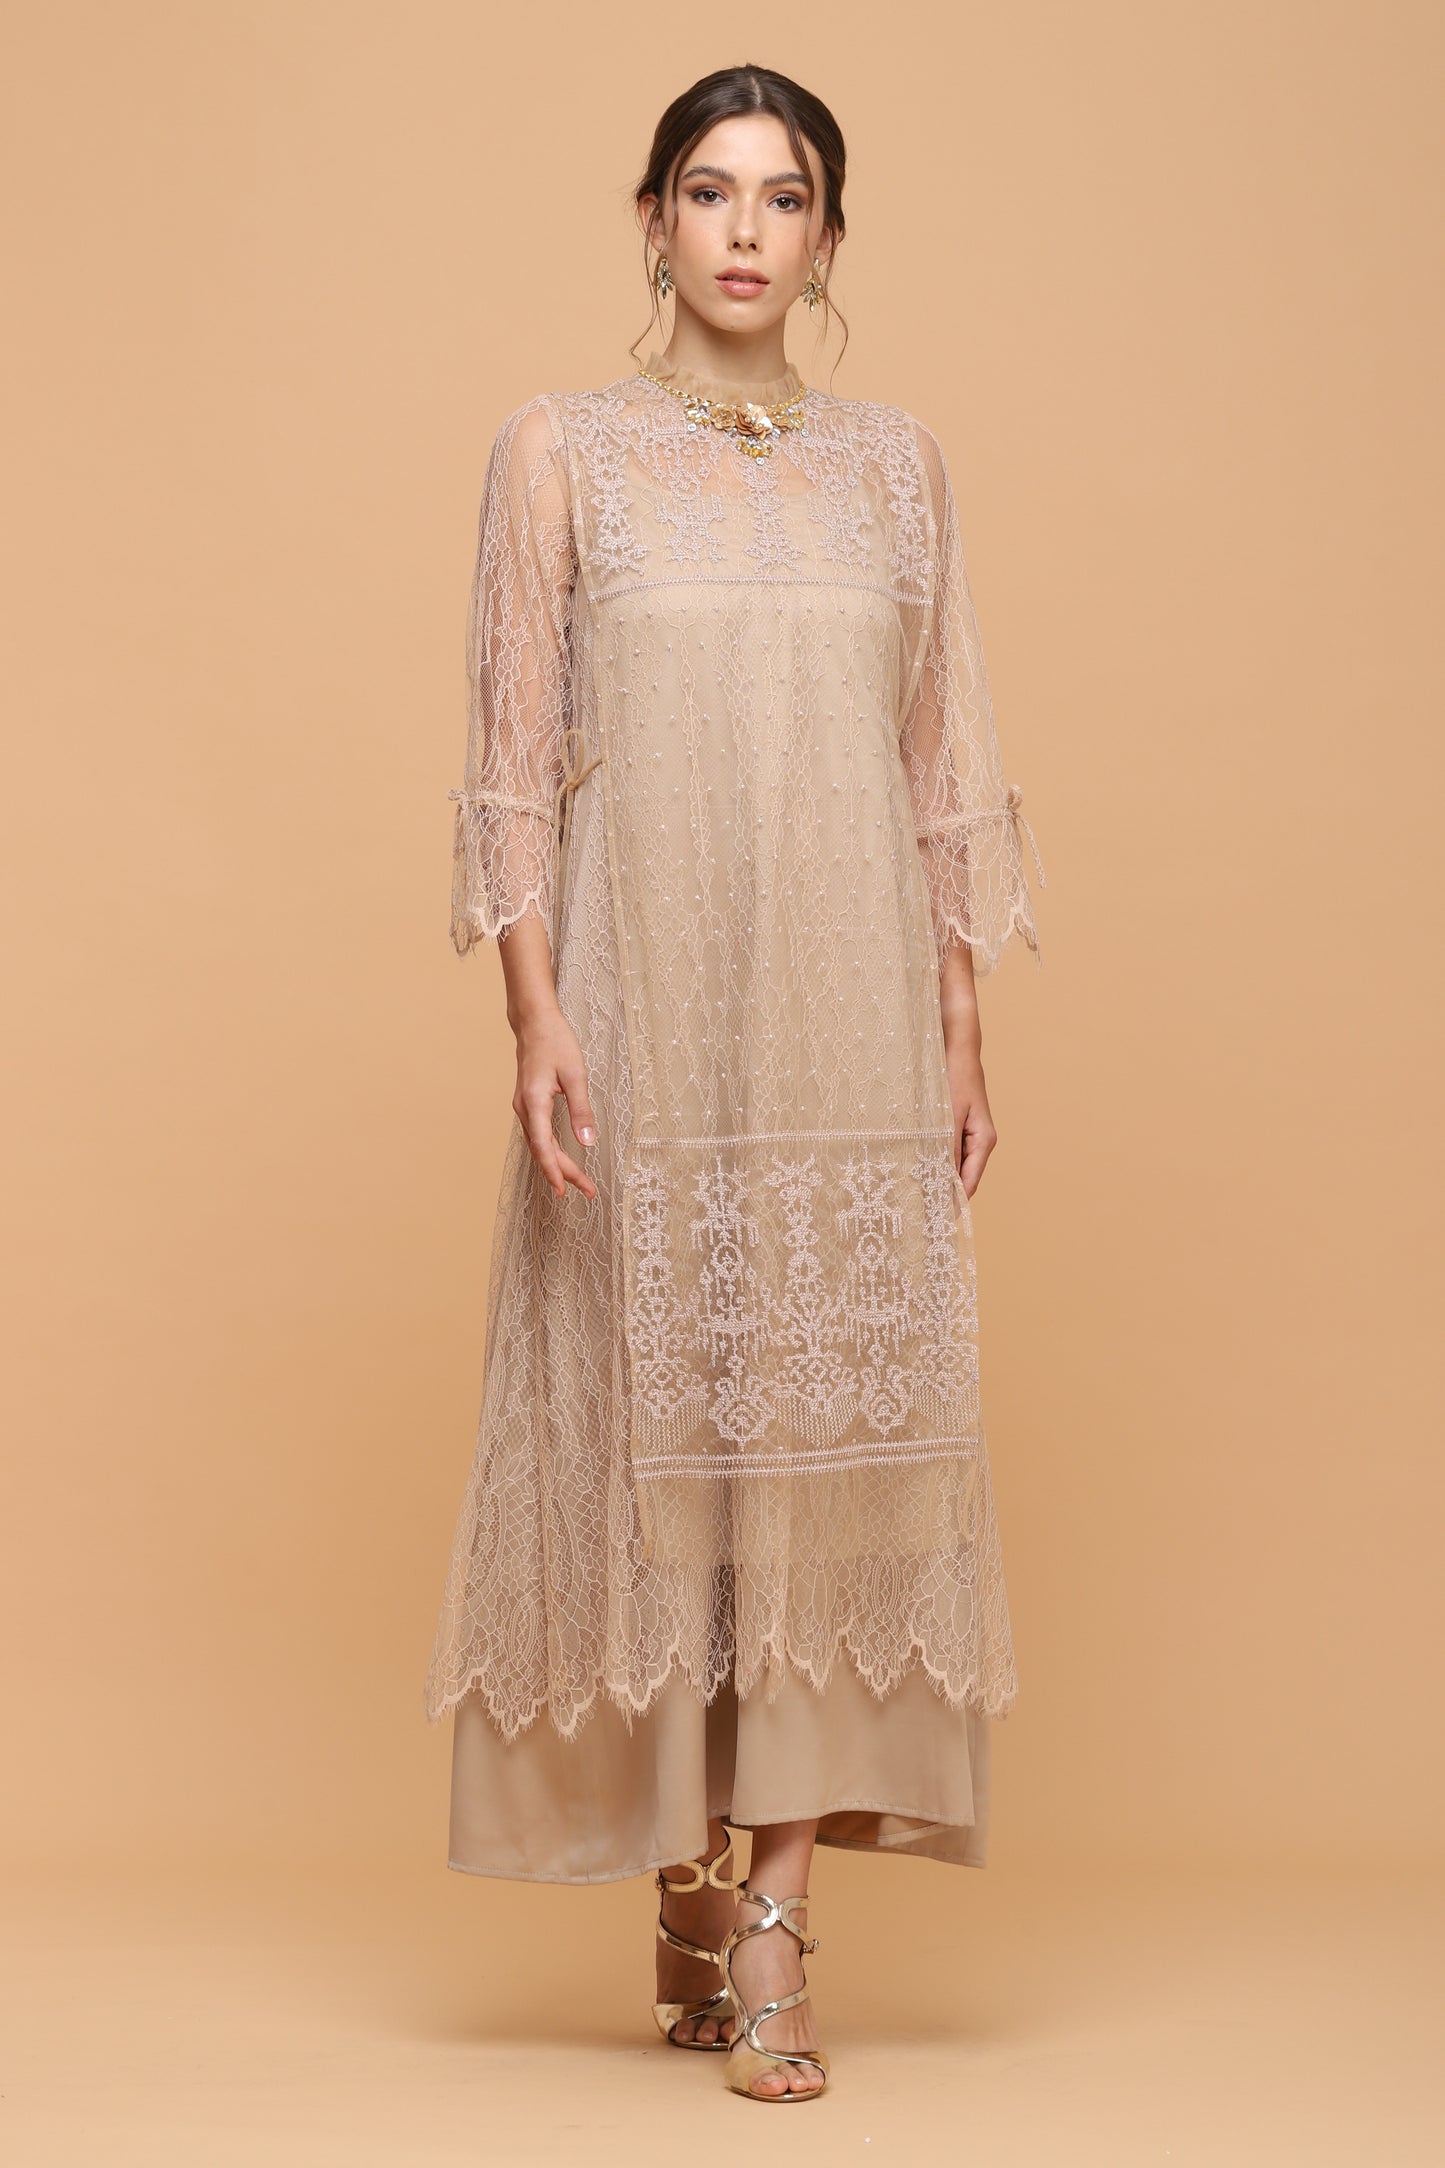 Brave - Soft Ethnic Lace Maxi Dress